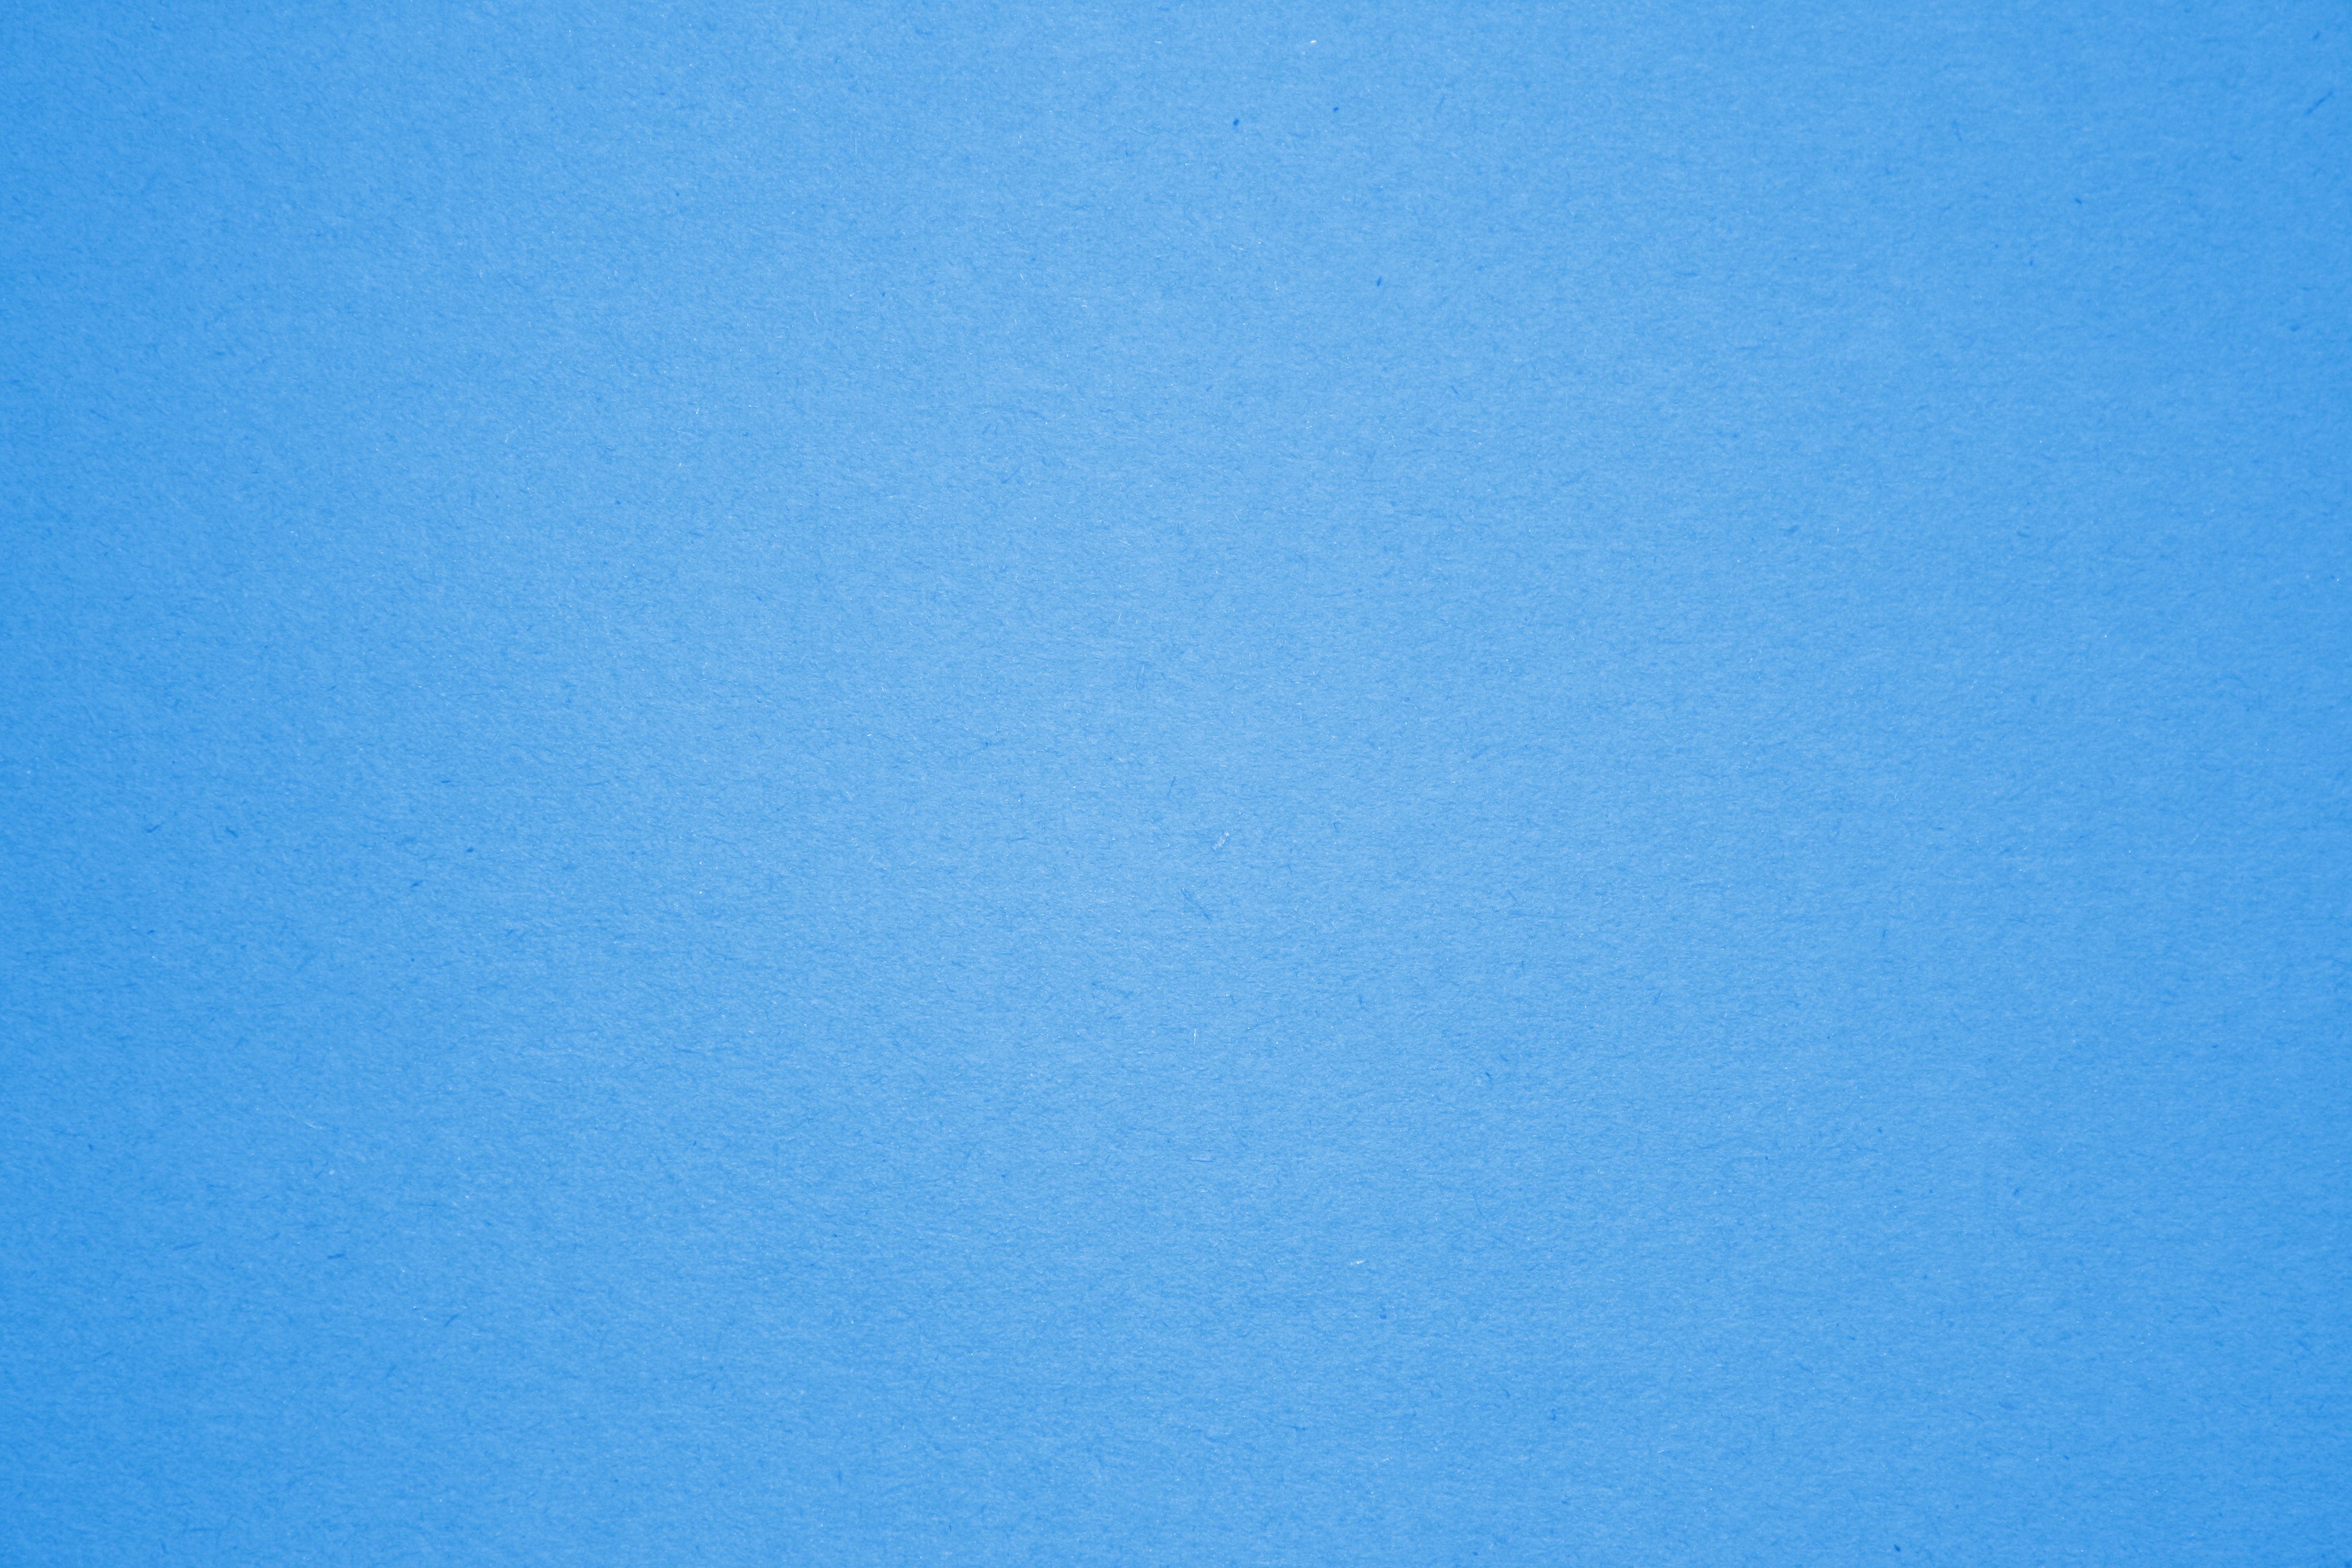 Light Blue Construction Paper Texture Picture, Free Photograph